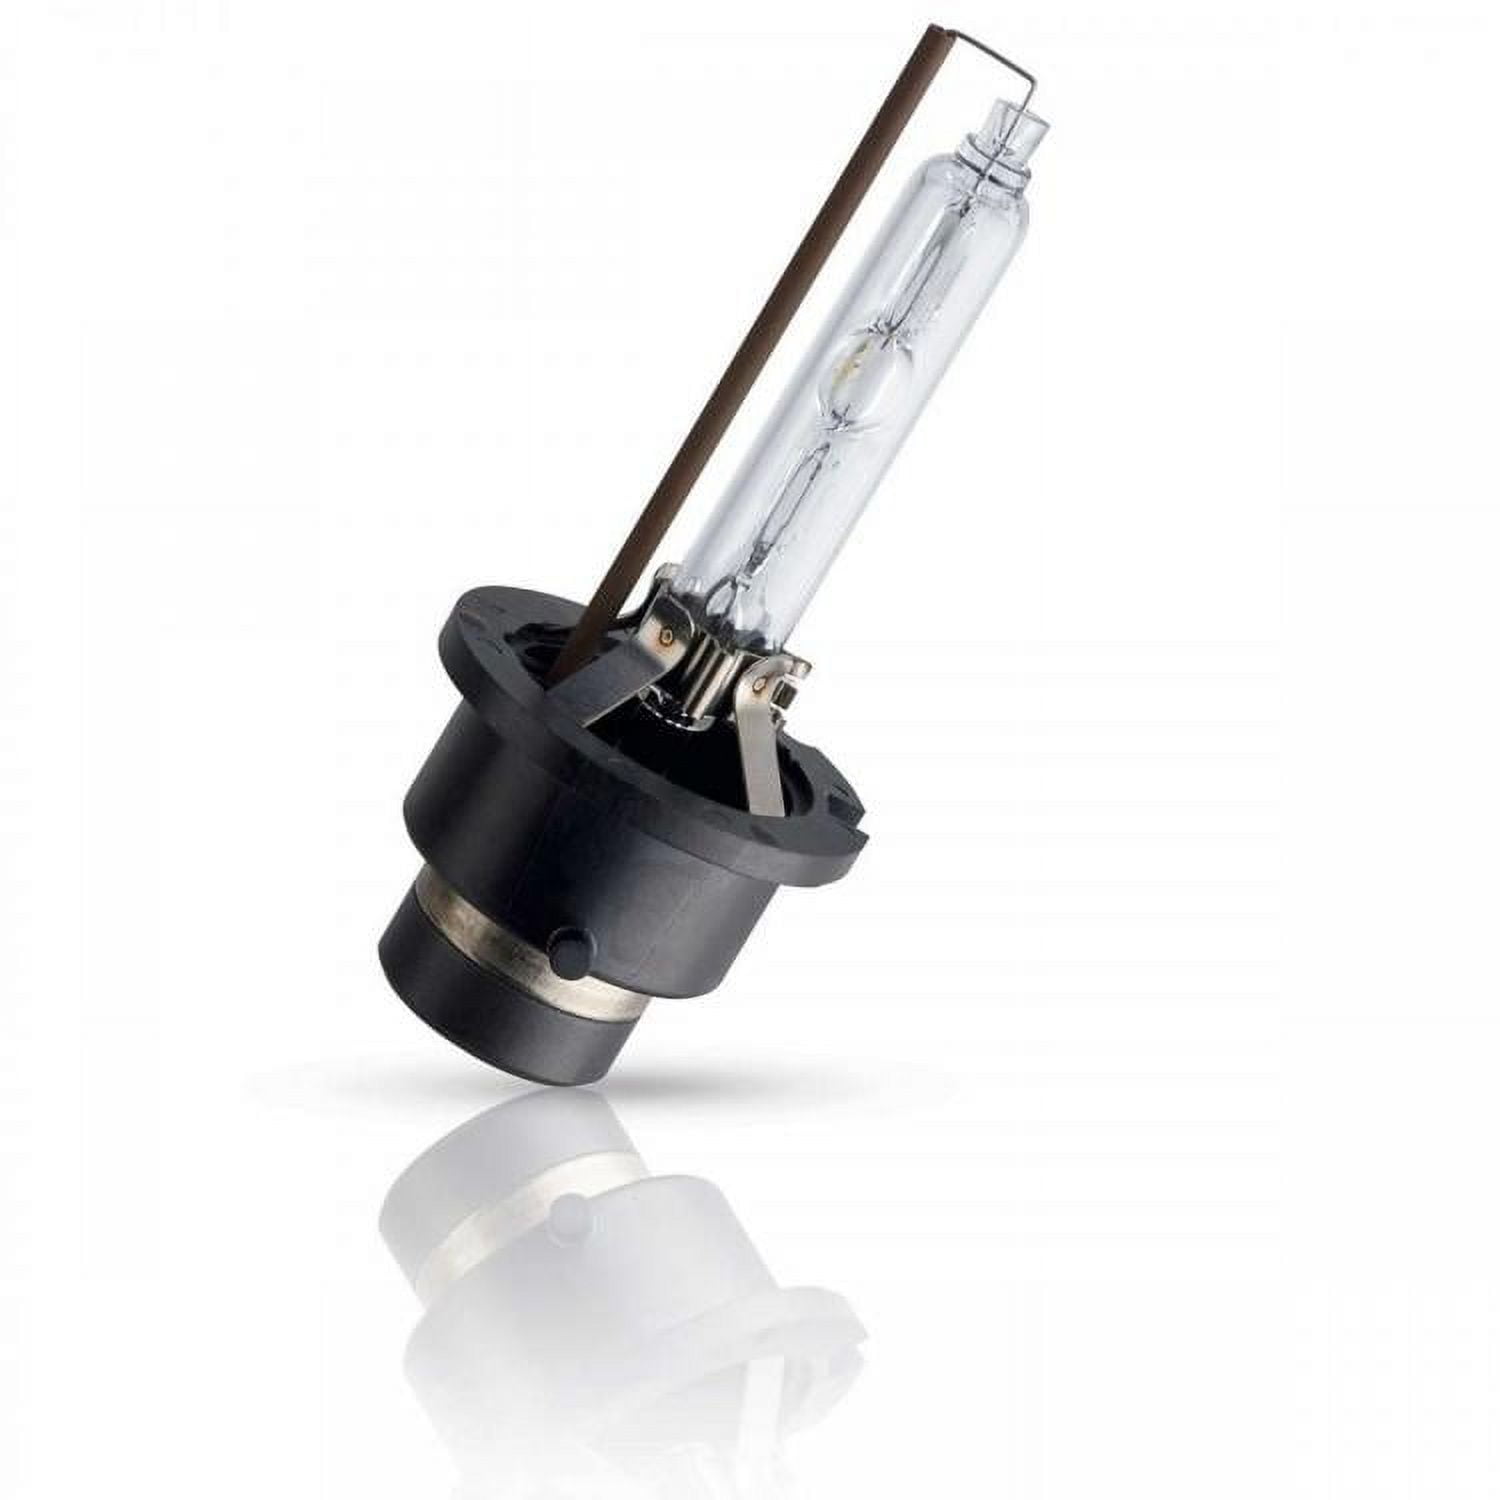 D2S 35W Xenon Automotive HID Headlight 4300K Bulb Lamp